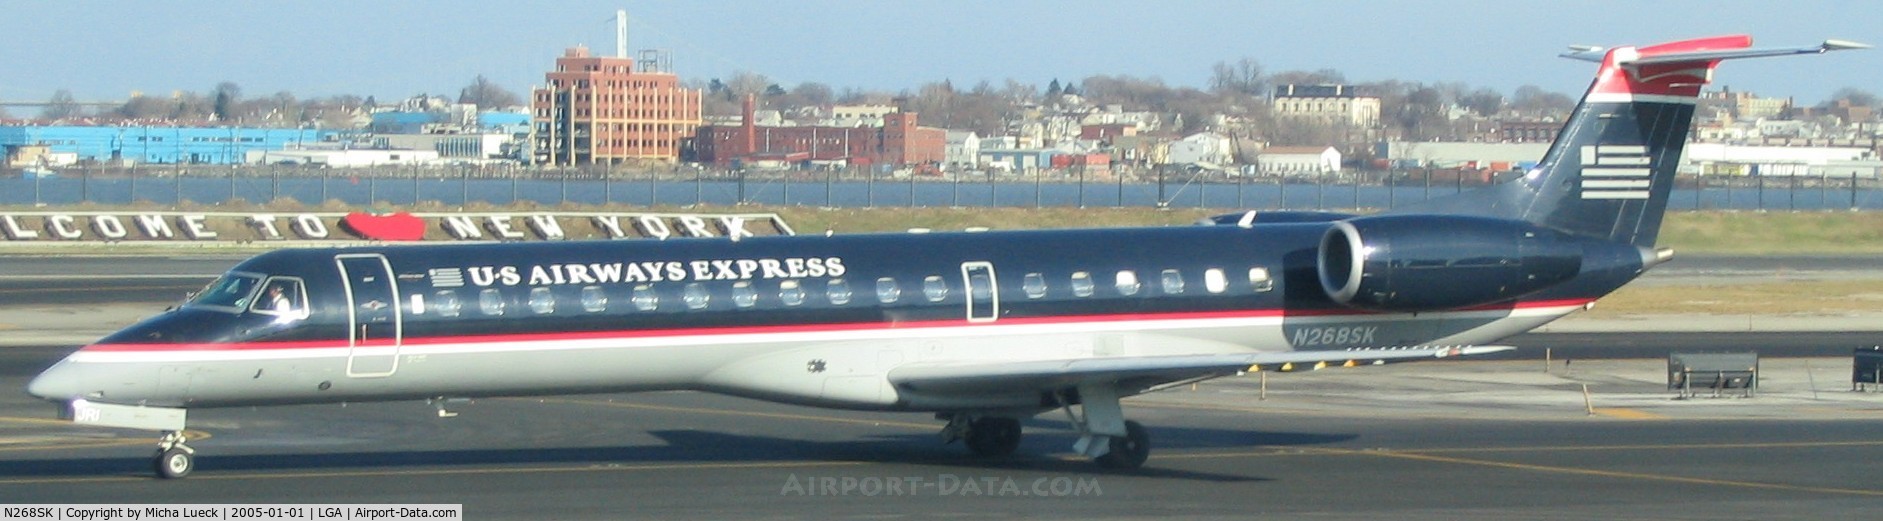 N268SK, 2000 Embraer ERJ-145LR (EMB-145LR) C/N 145270, Chautauqua Airlines for US Airways Express